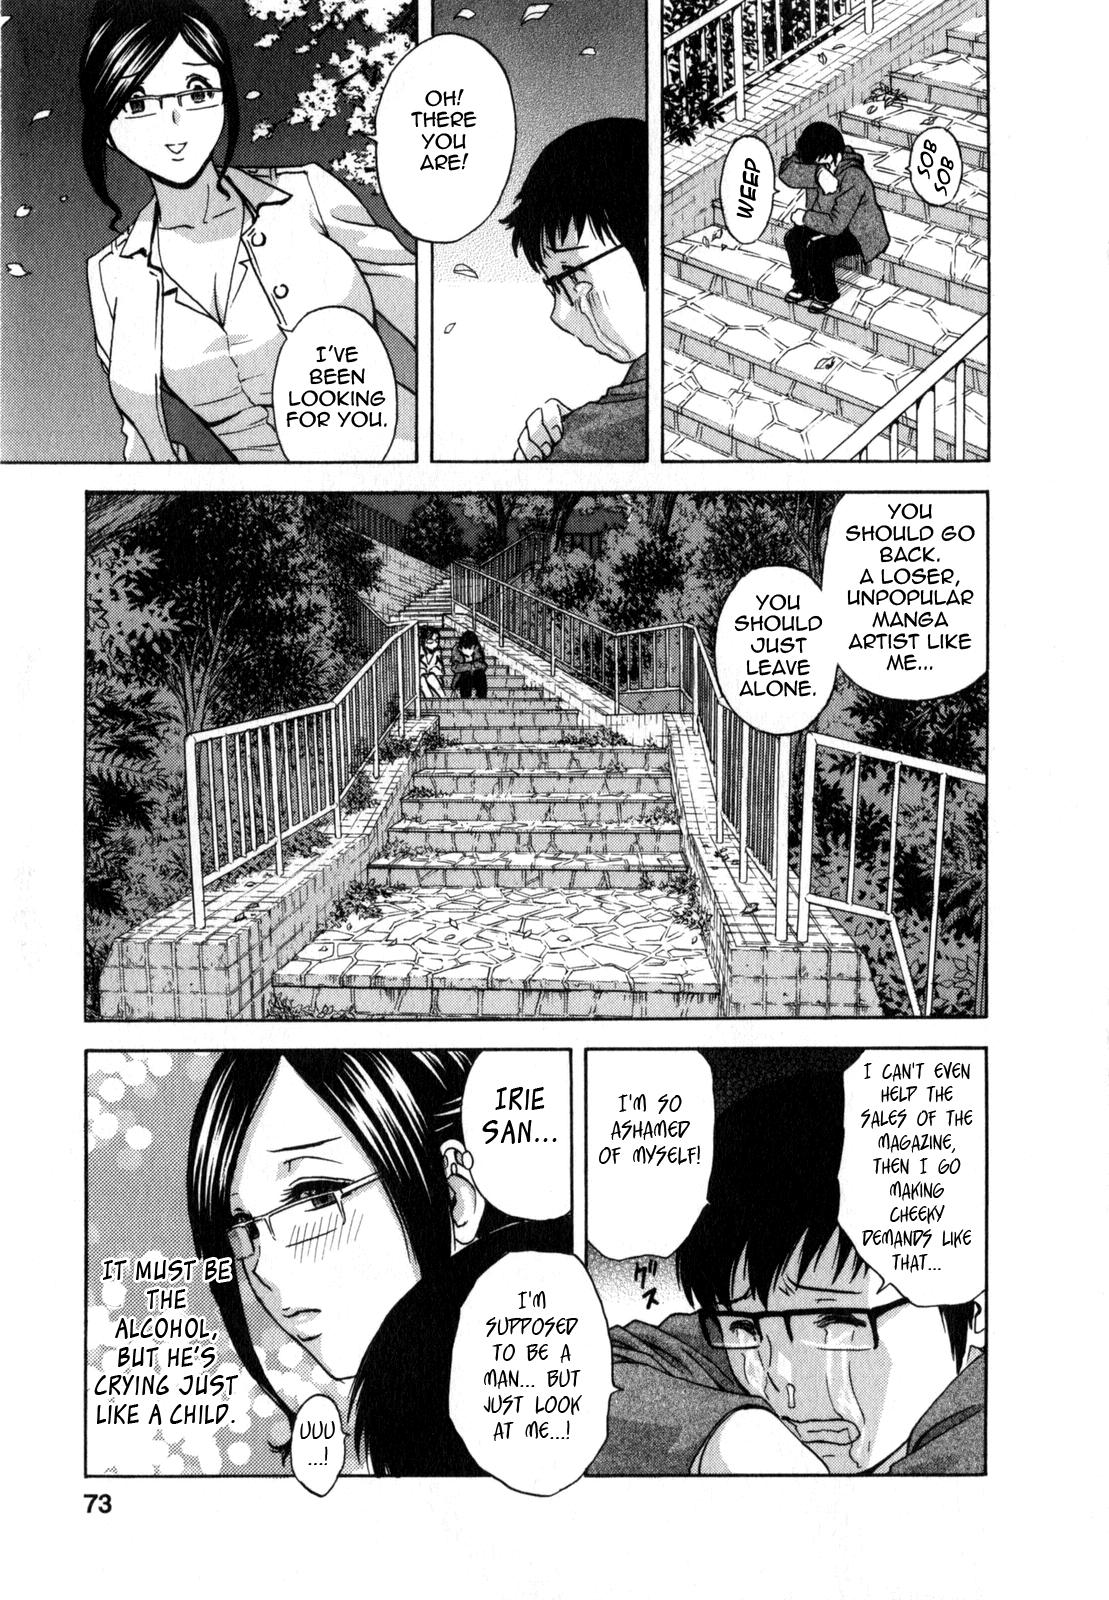 [Hidemaru] Life with Married Women Just Like a Manga 2 - Ch. 1-7 [English] {Tadanohito} 75